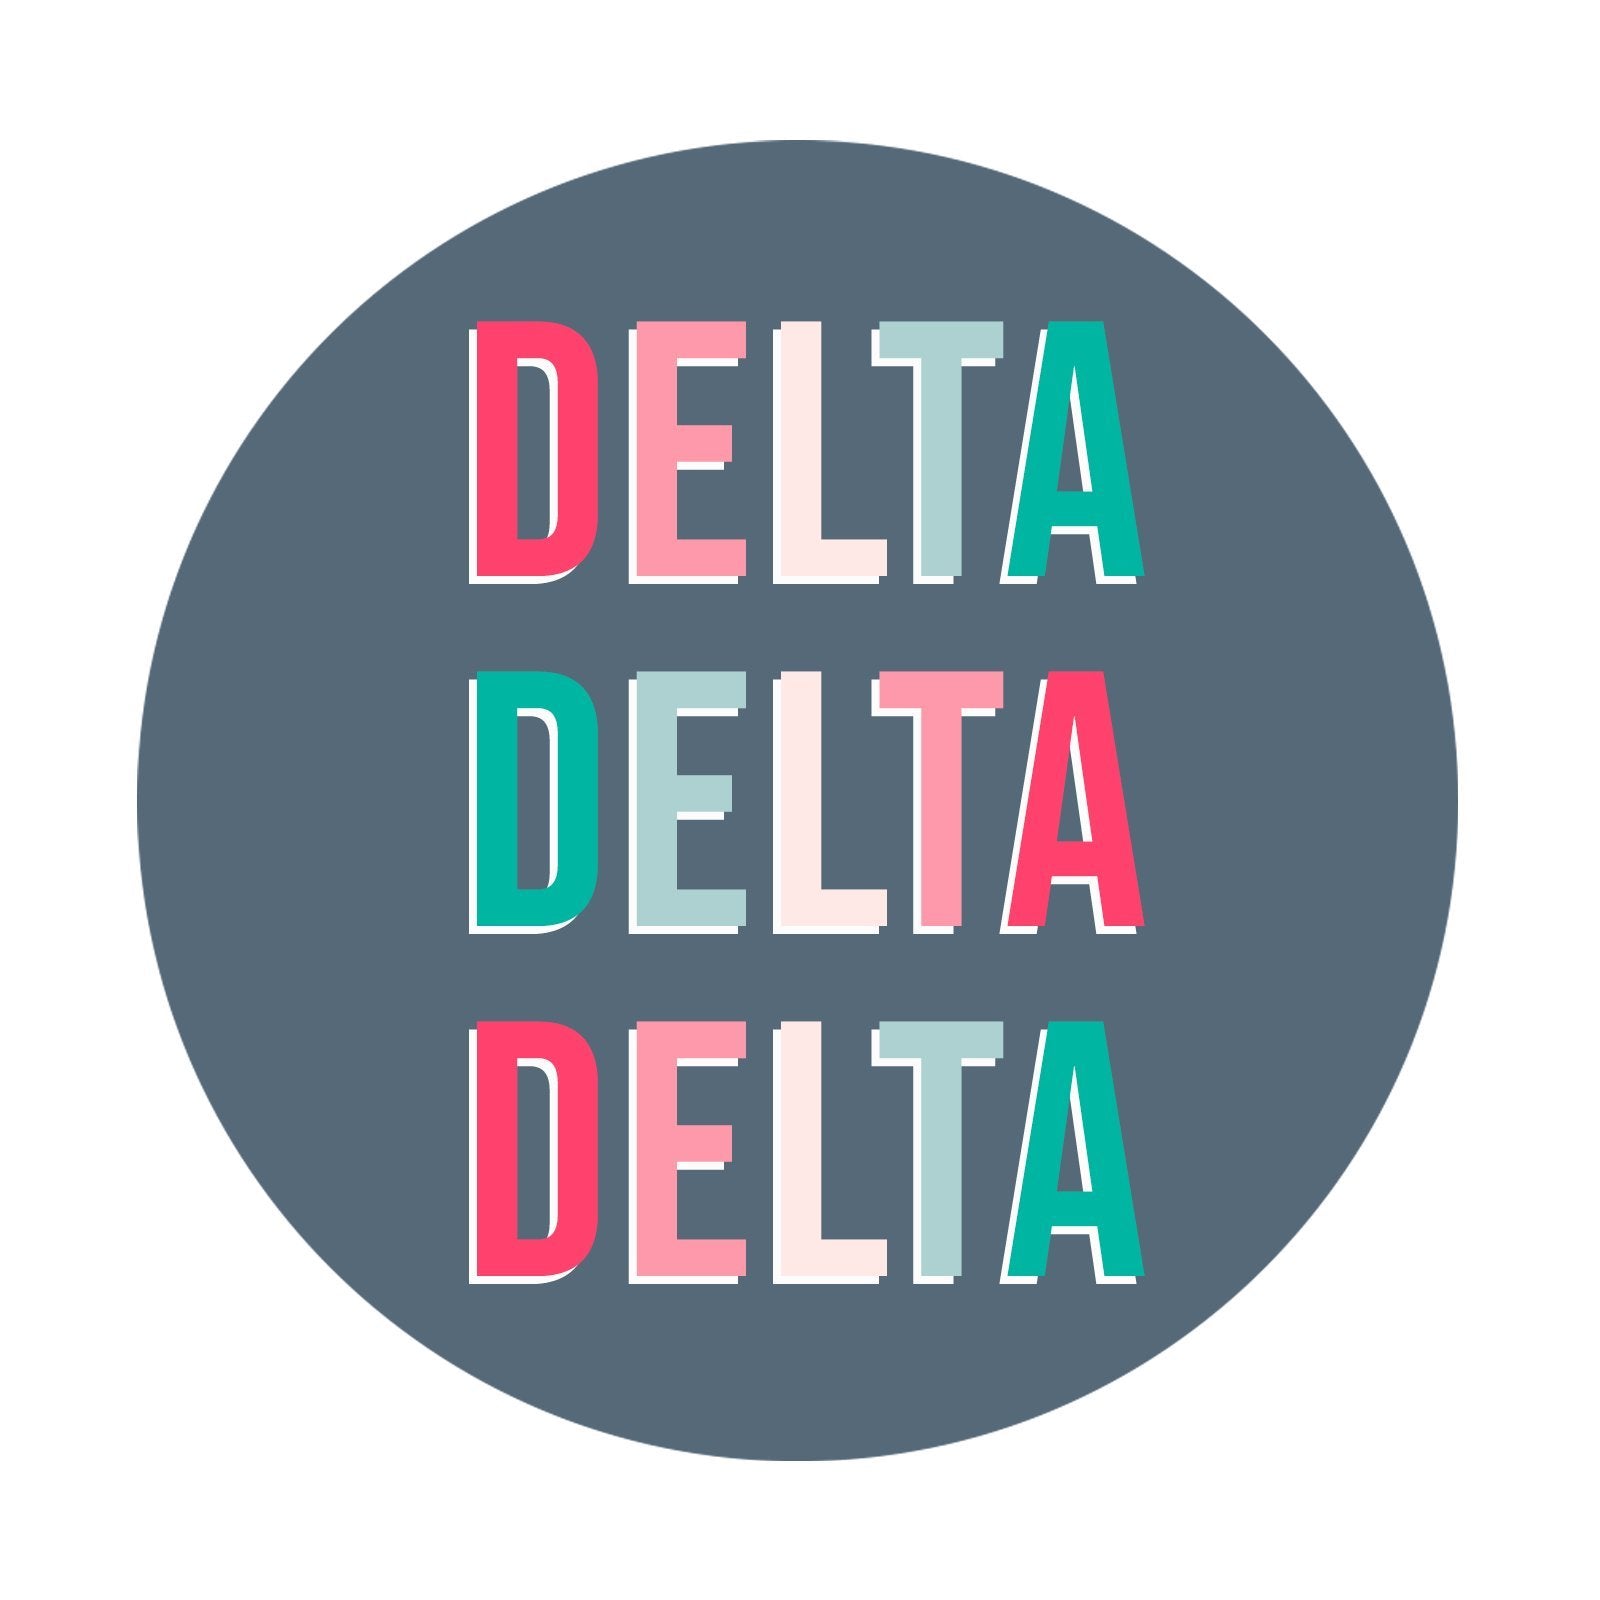 big little reveal joggers sorority sweatpants Delta Delta Delta rush shirts sorority gifts Tri Delta bid day sorority recruitment